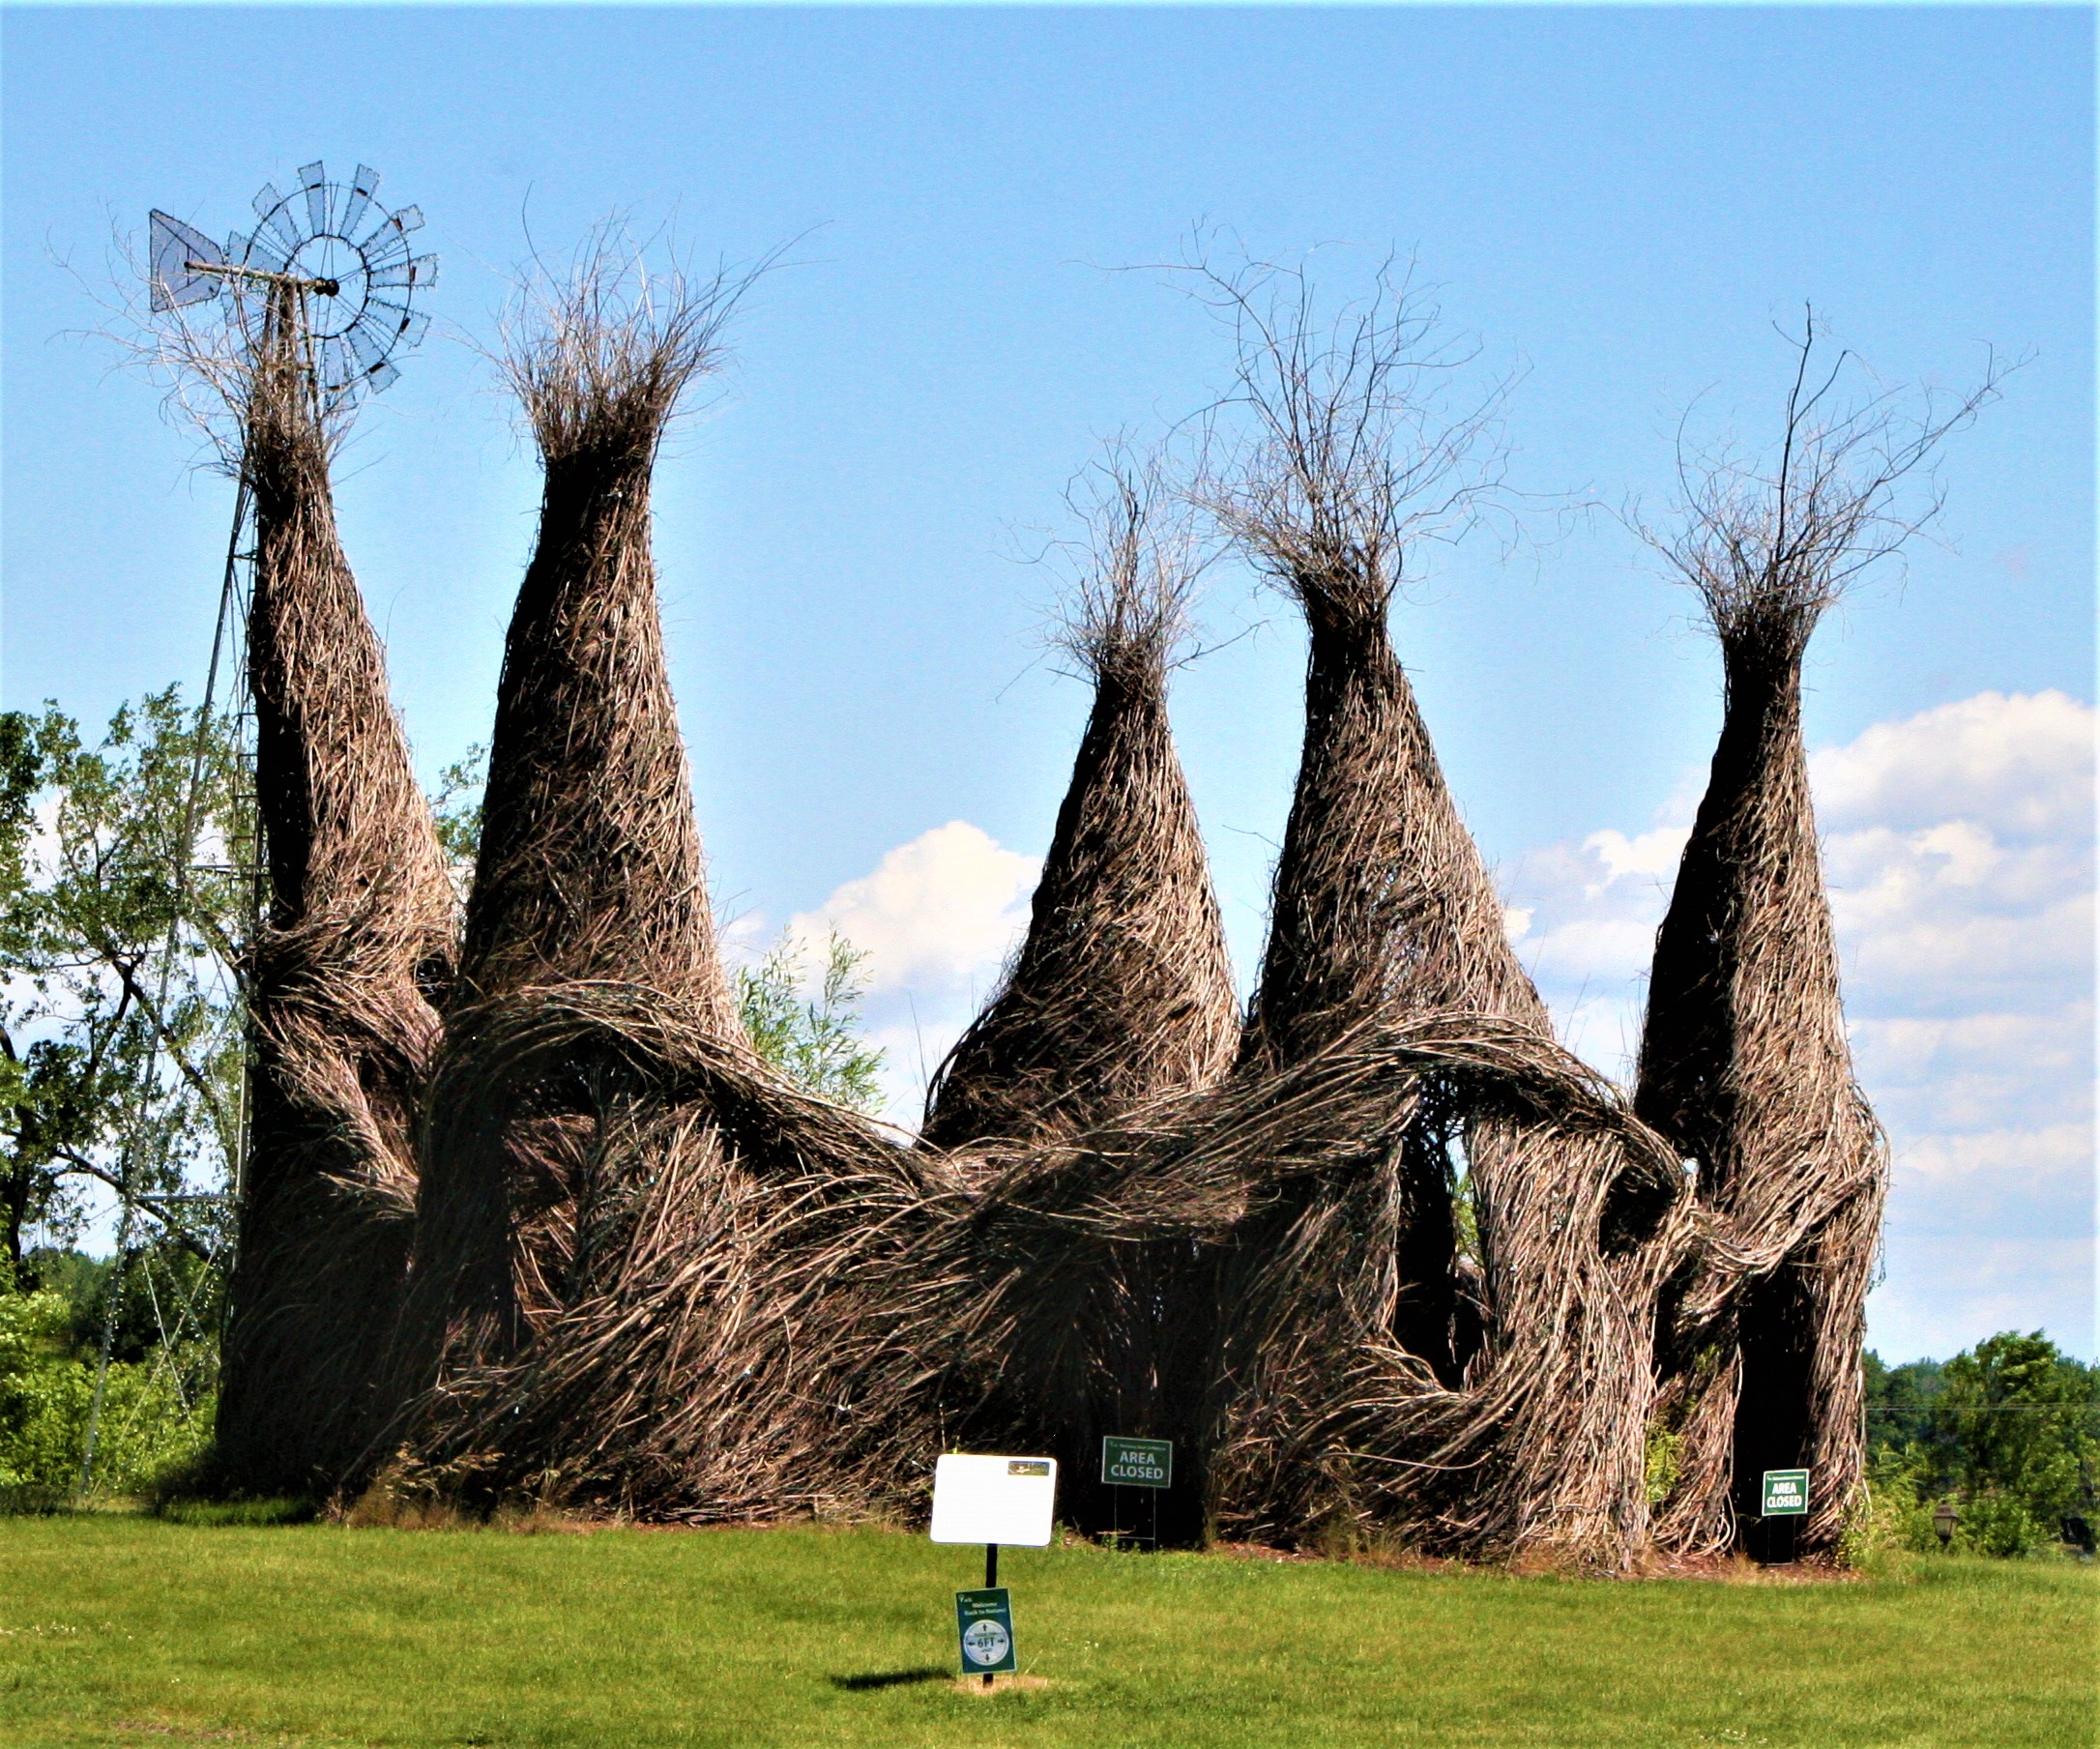 “YouBetcha” stick sculpture at the Minnesota Landscape Arboretum